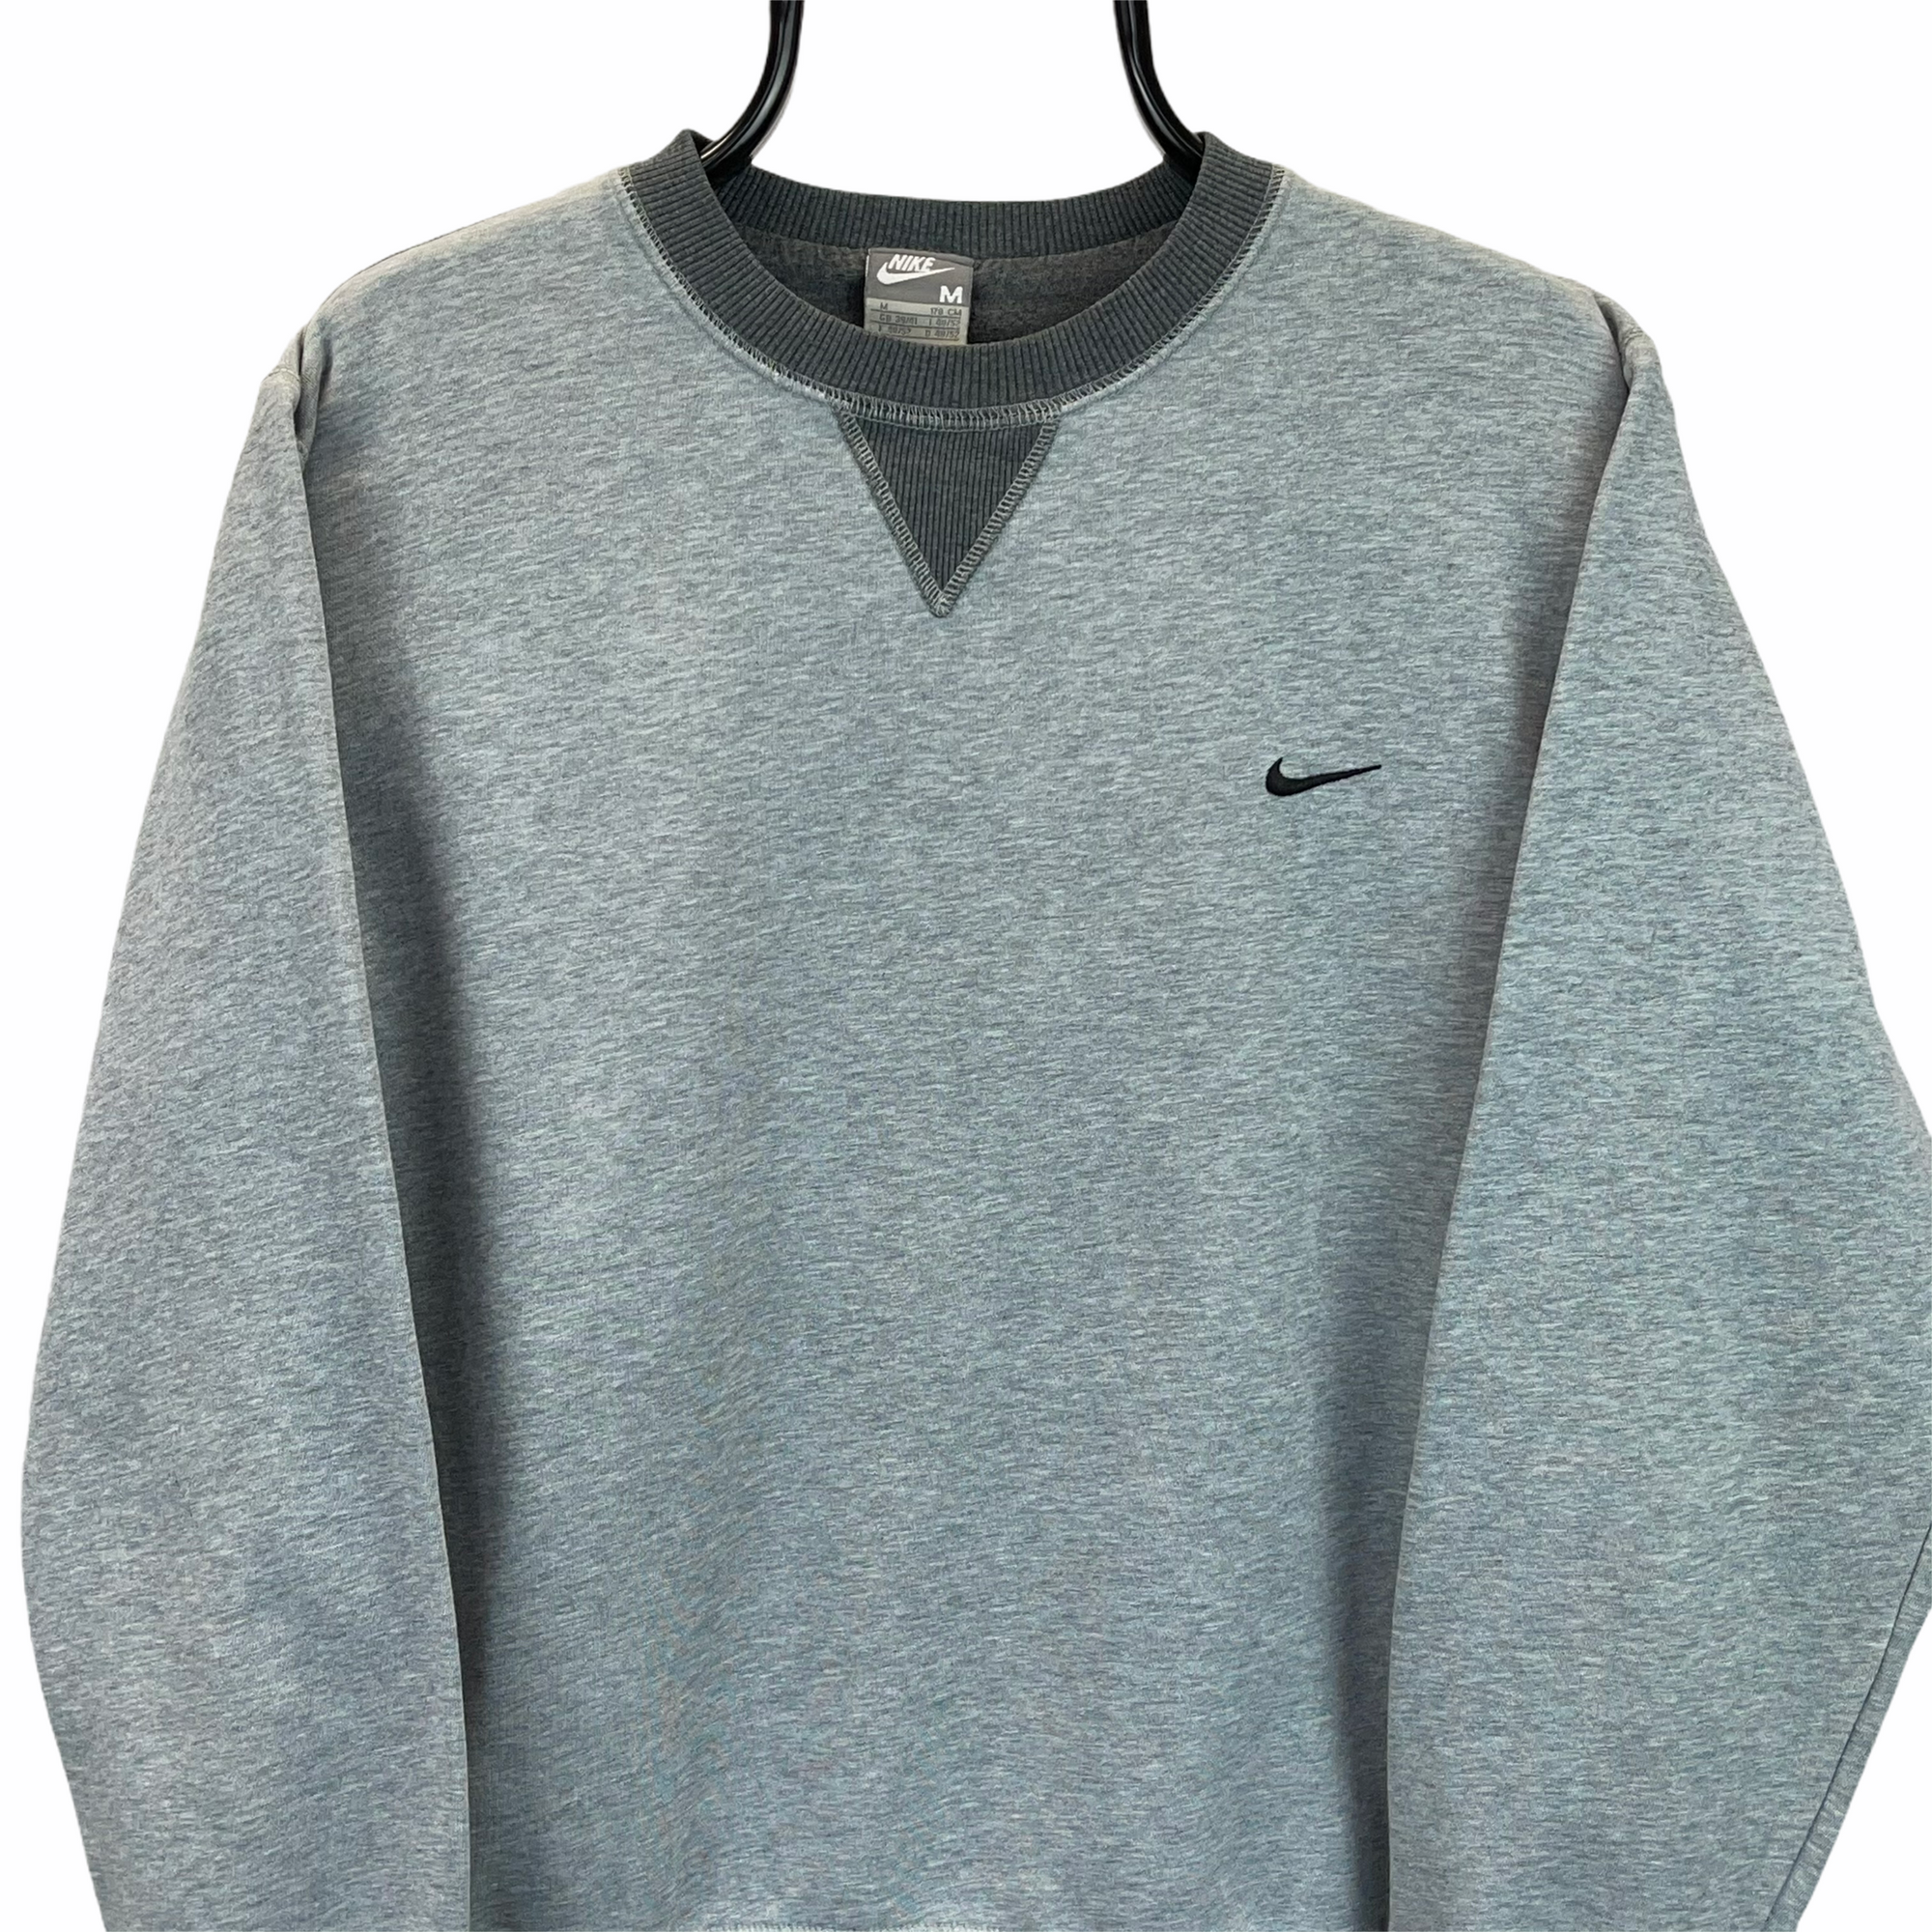 Vintage Nike Embroidered Small Swoosh Sweatshirt in Grey & Charcoal - Men's Medium/Women's Large